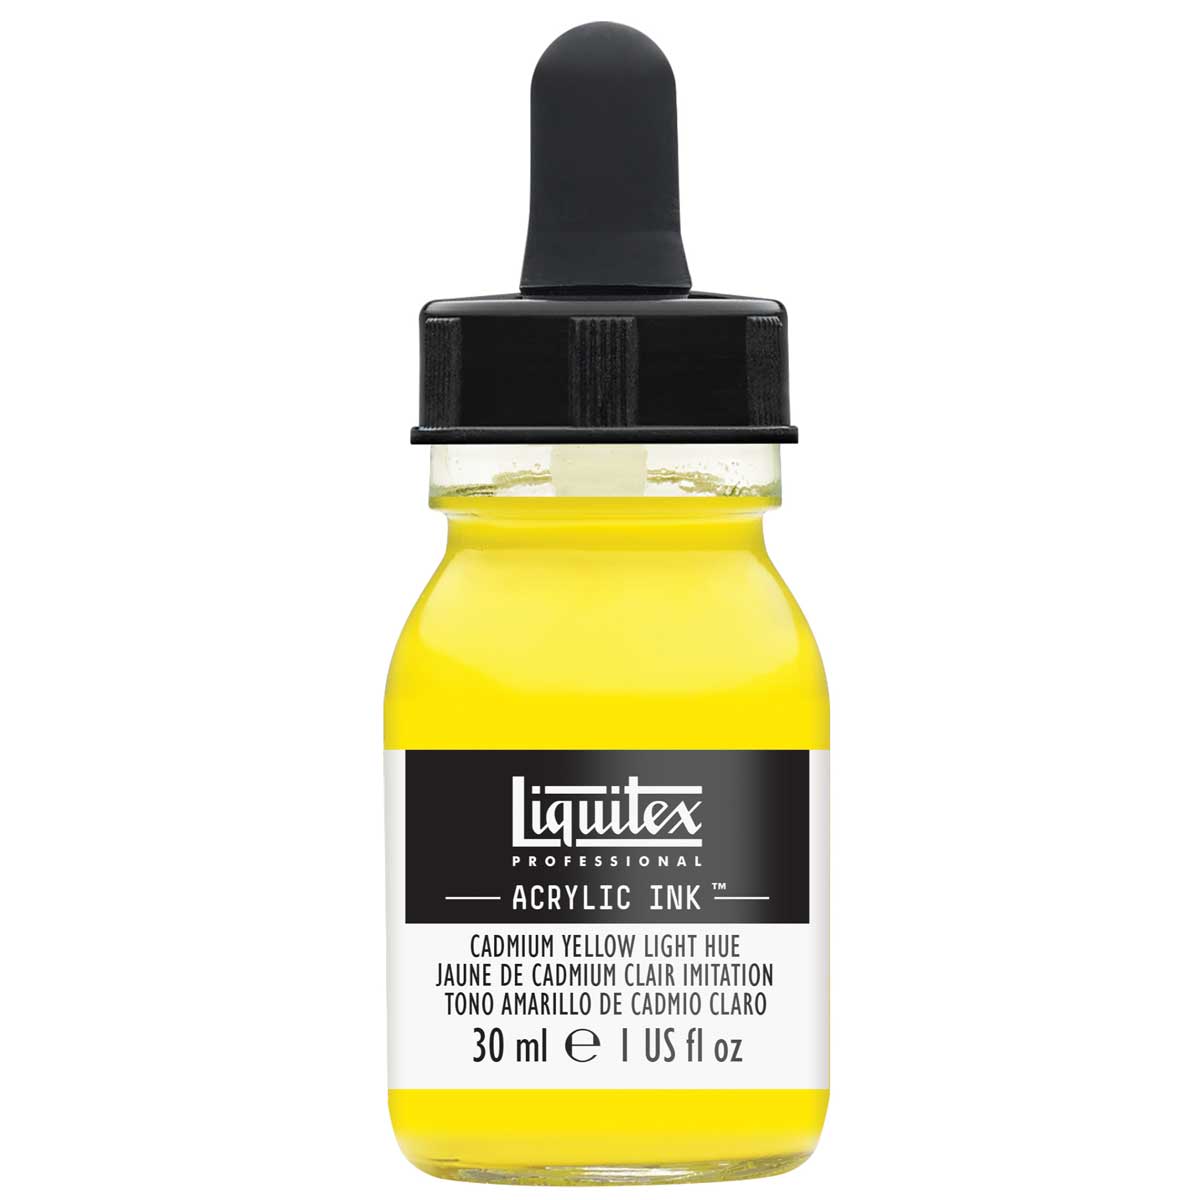 Liquitex Professional Acrylic Ink - Cadmium Yellow Lt Hue 30ml/1oz